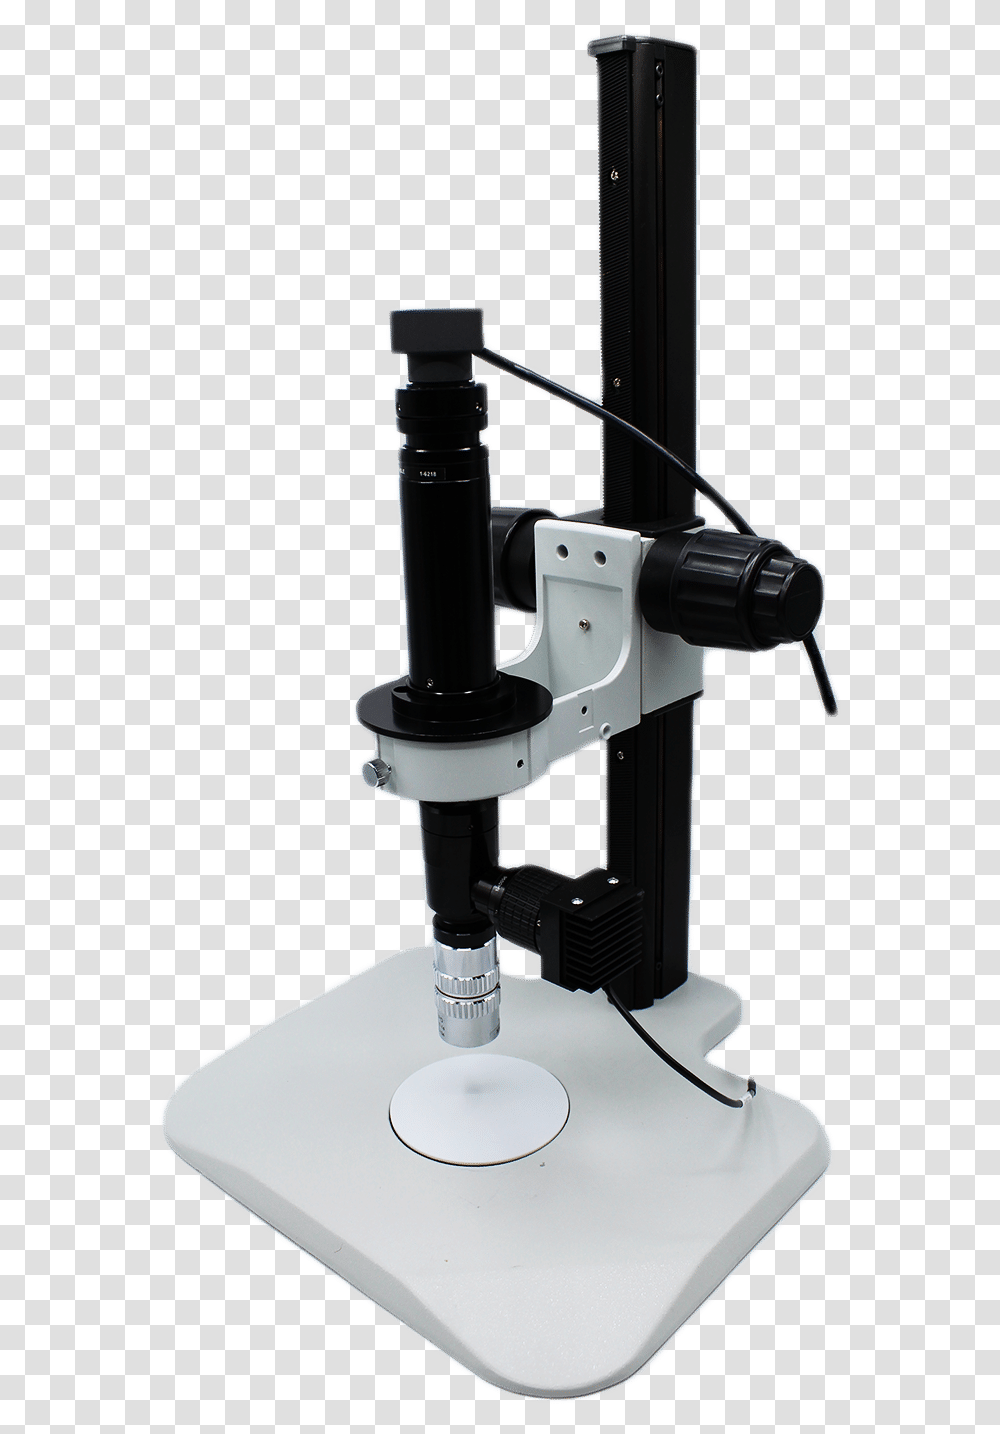 Digital High Speend Microscope 7092 Fps Milling, Mixer, Appliance, Sink Faucet Transparent Png